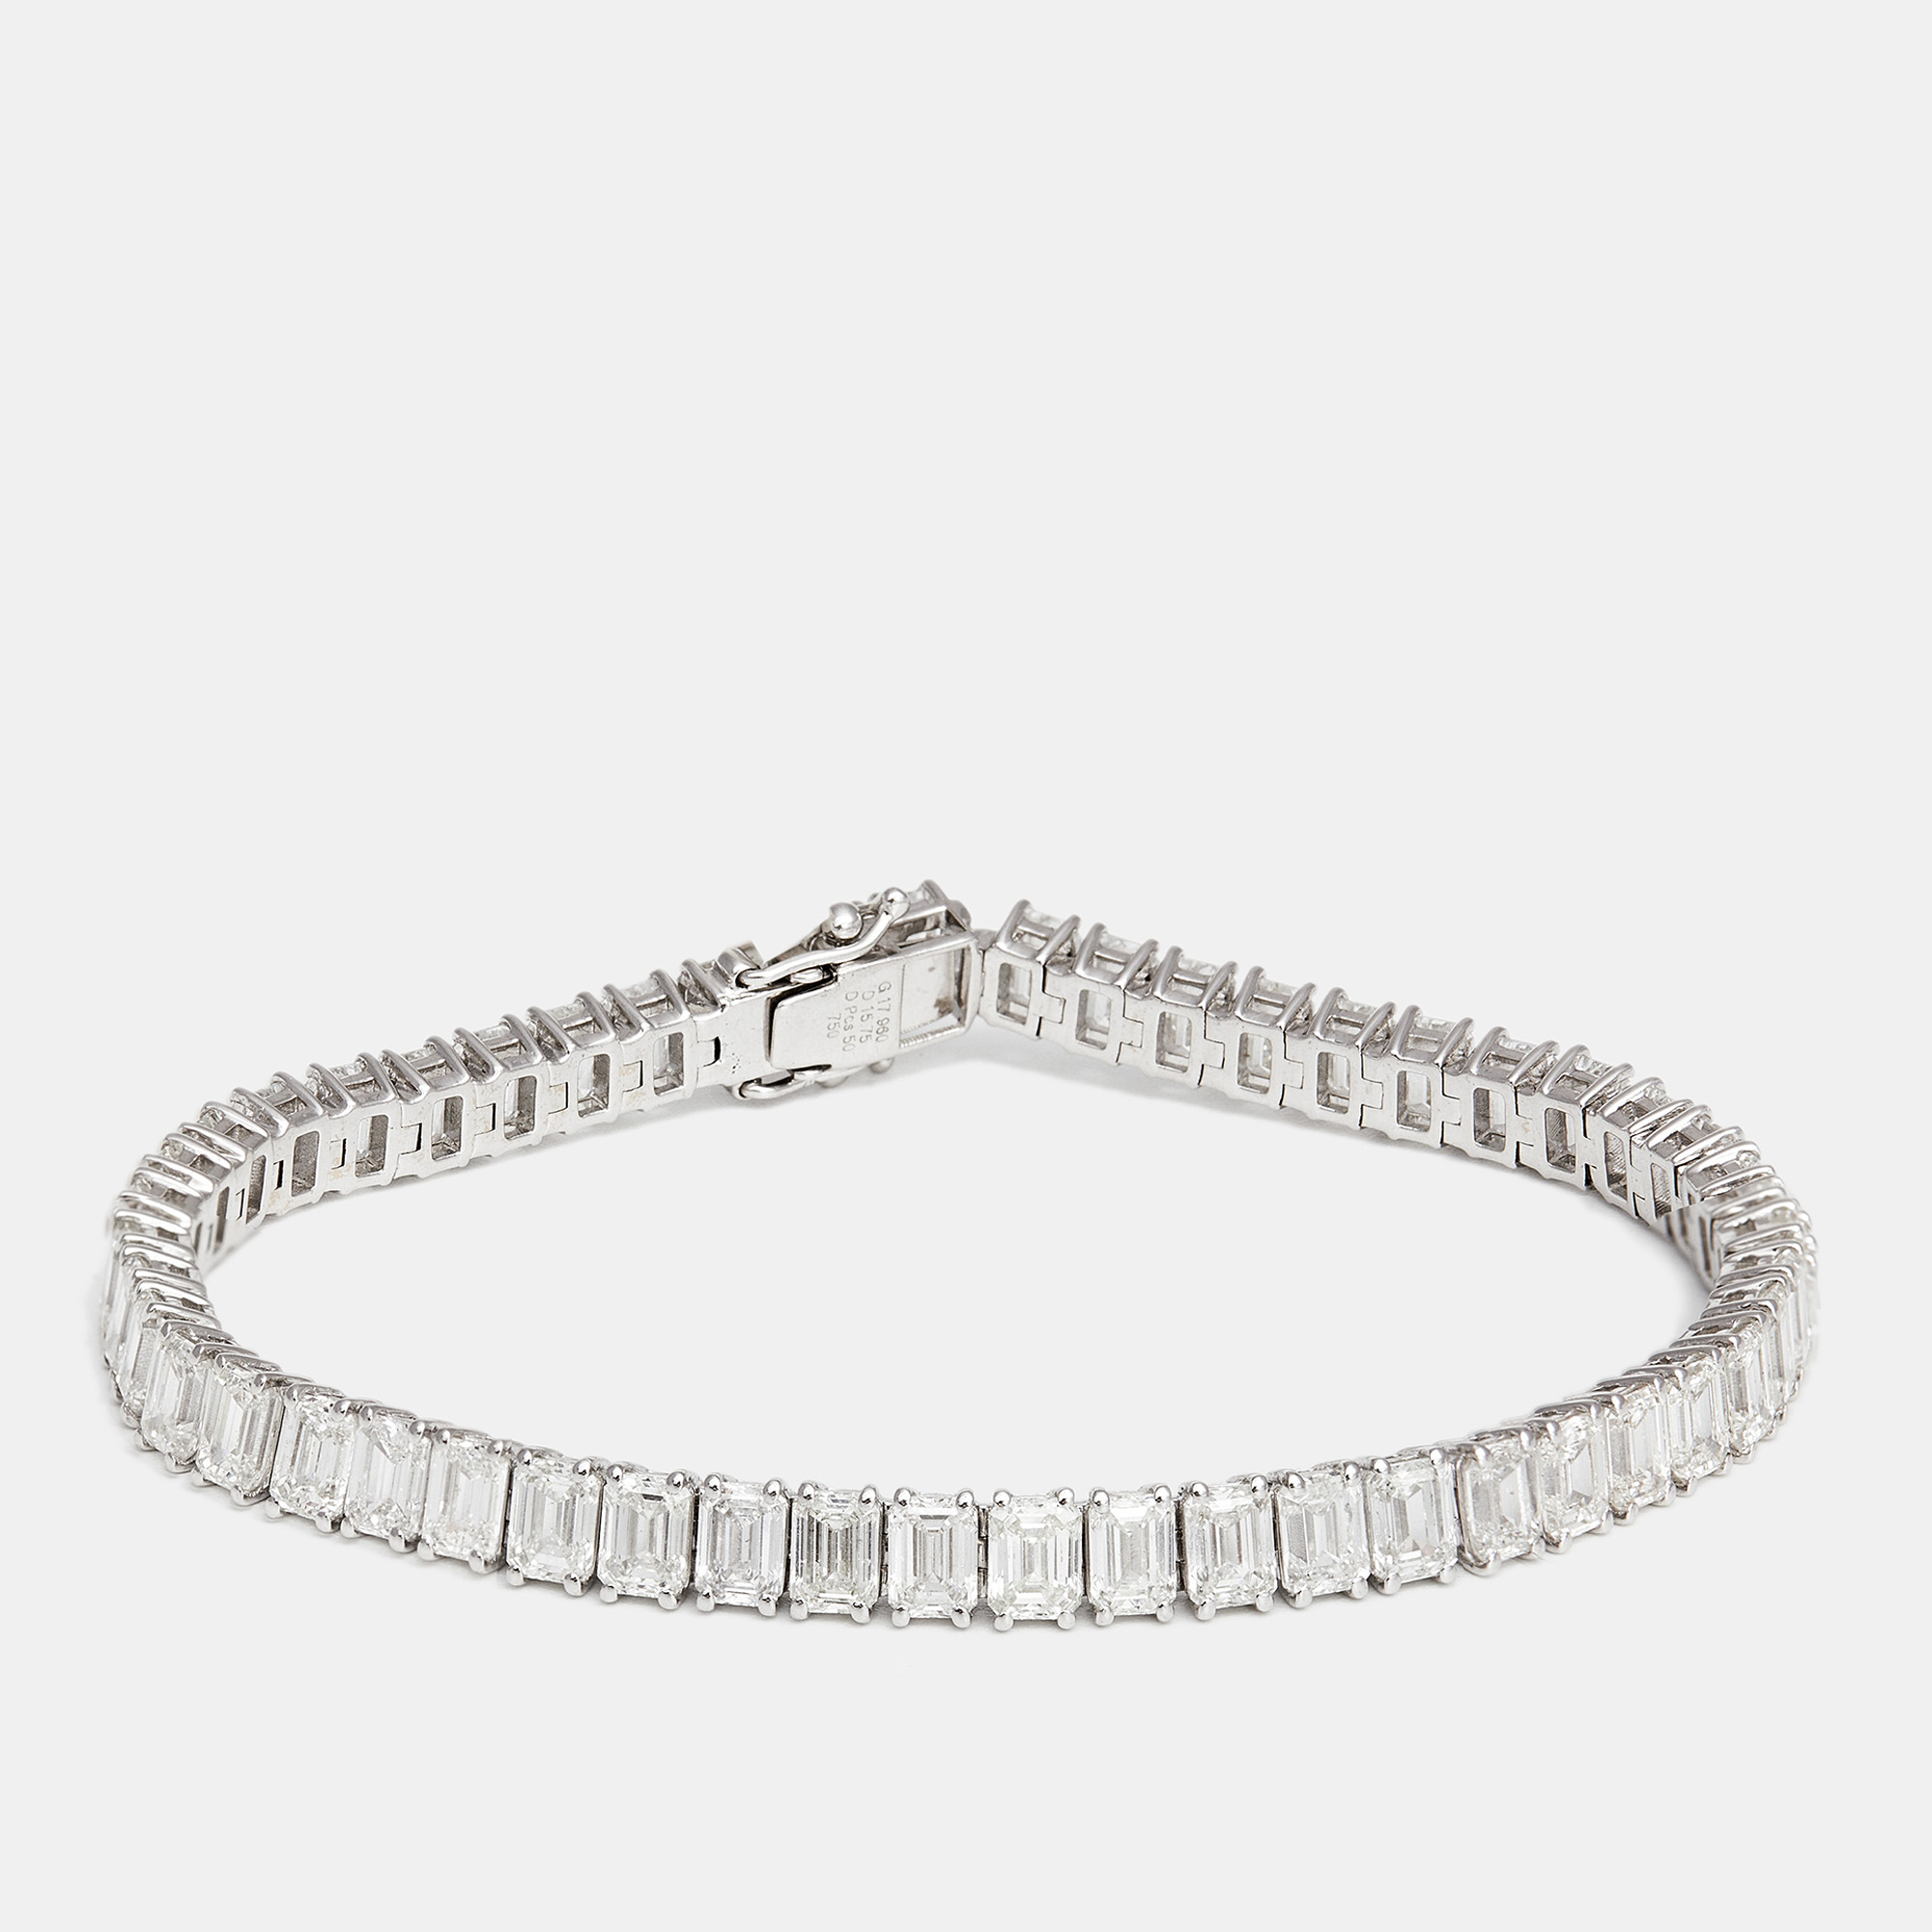 The diamond edit 18k white gold  bracelet